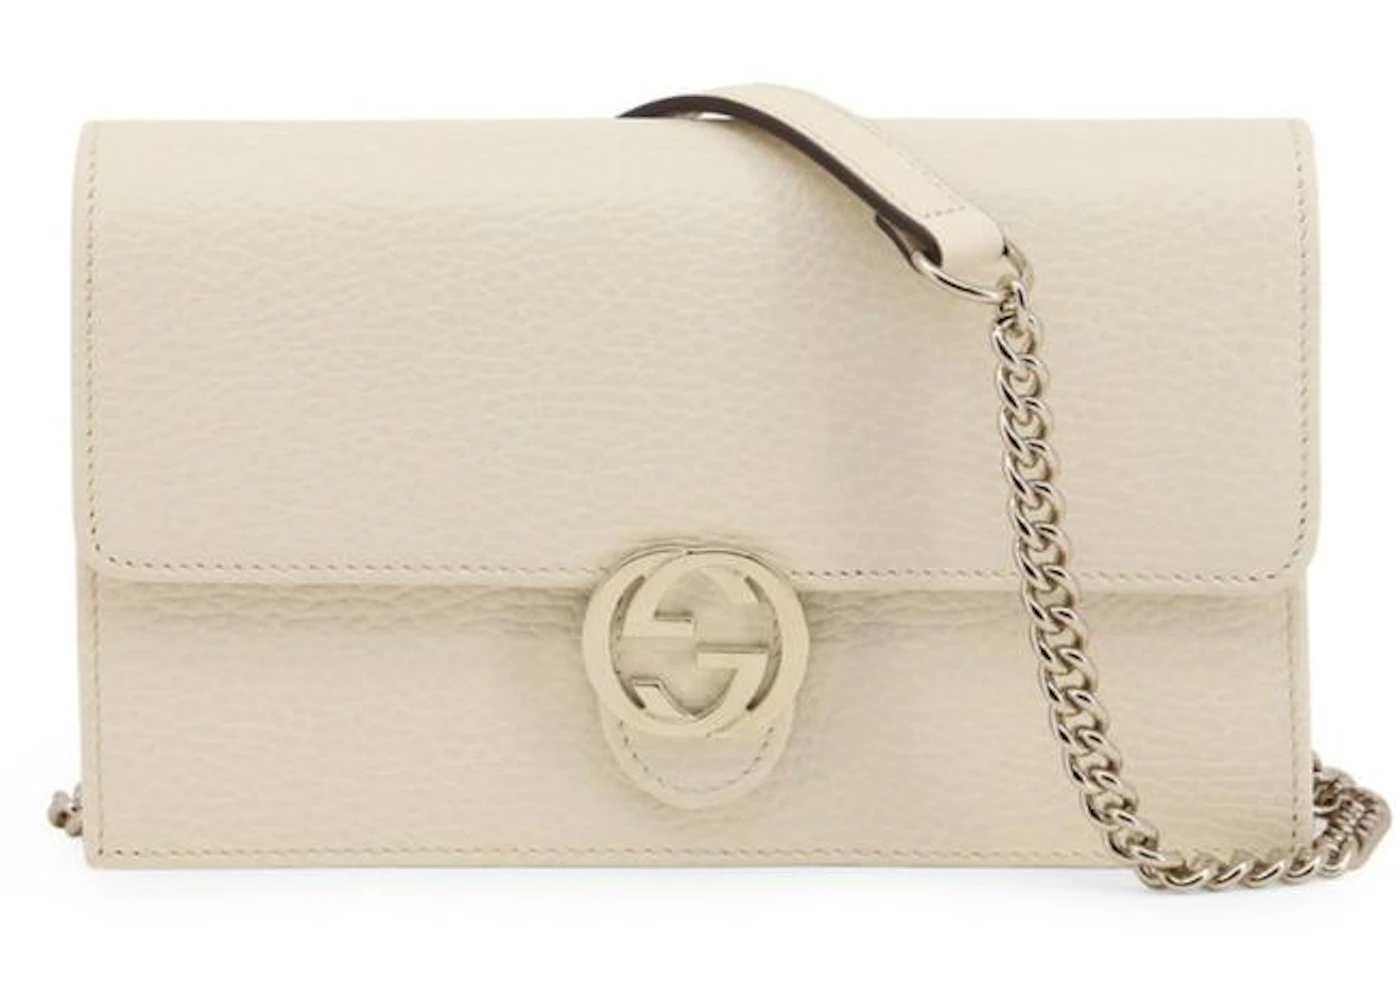 Gucci Interlocking Chain Crossbody Bag White in Leather Gold-tone US